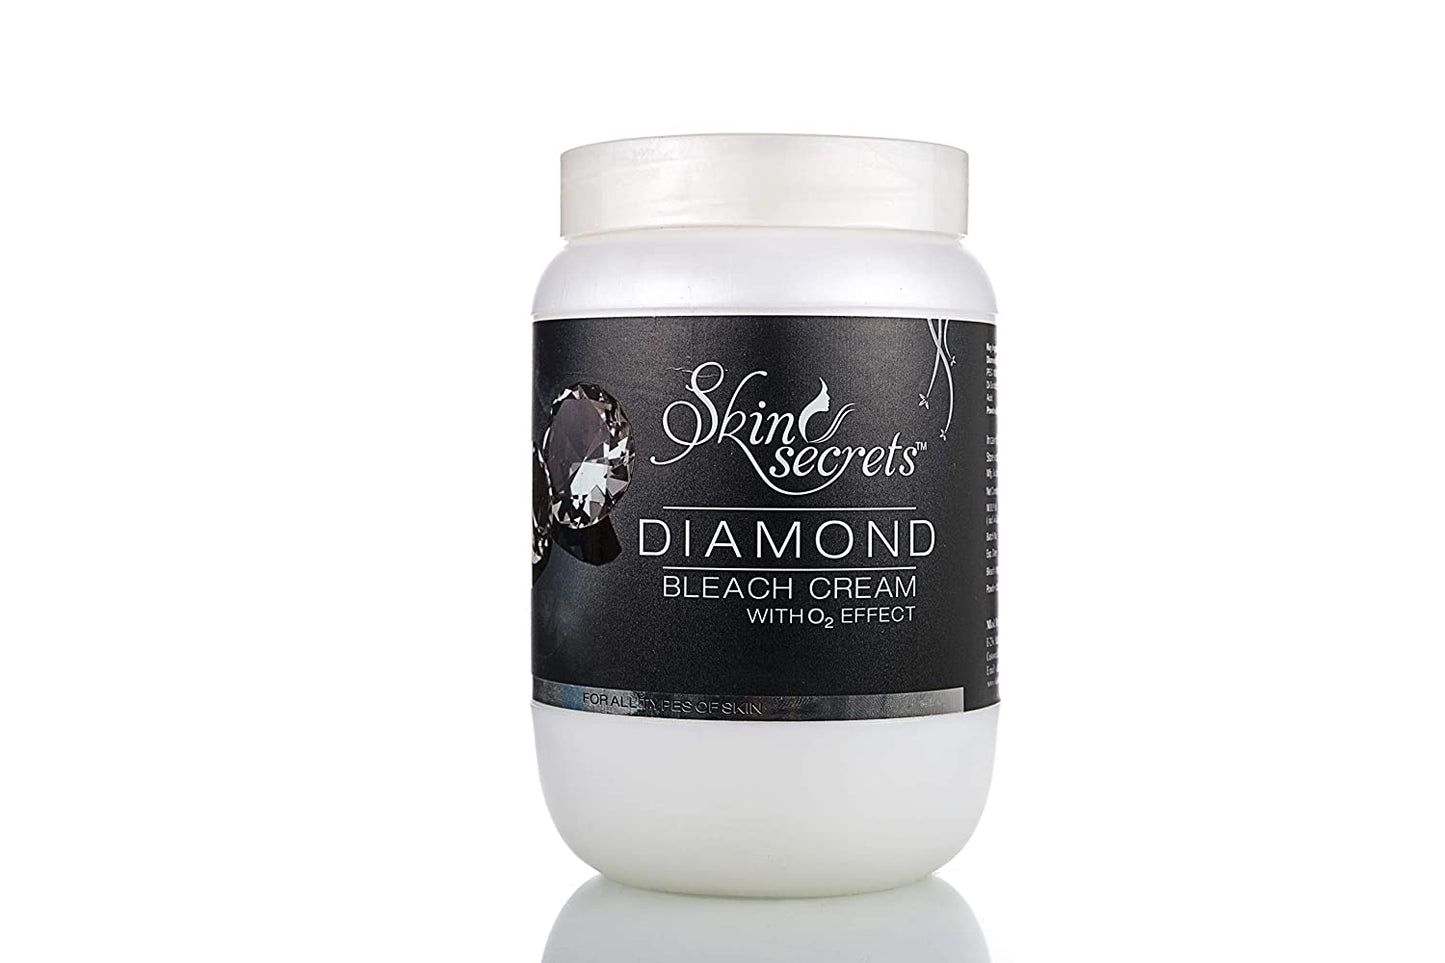 Skin Secrets Diamond Bleach with Diamond Dust & Licorice Extract 1kg